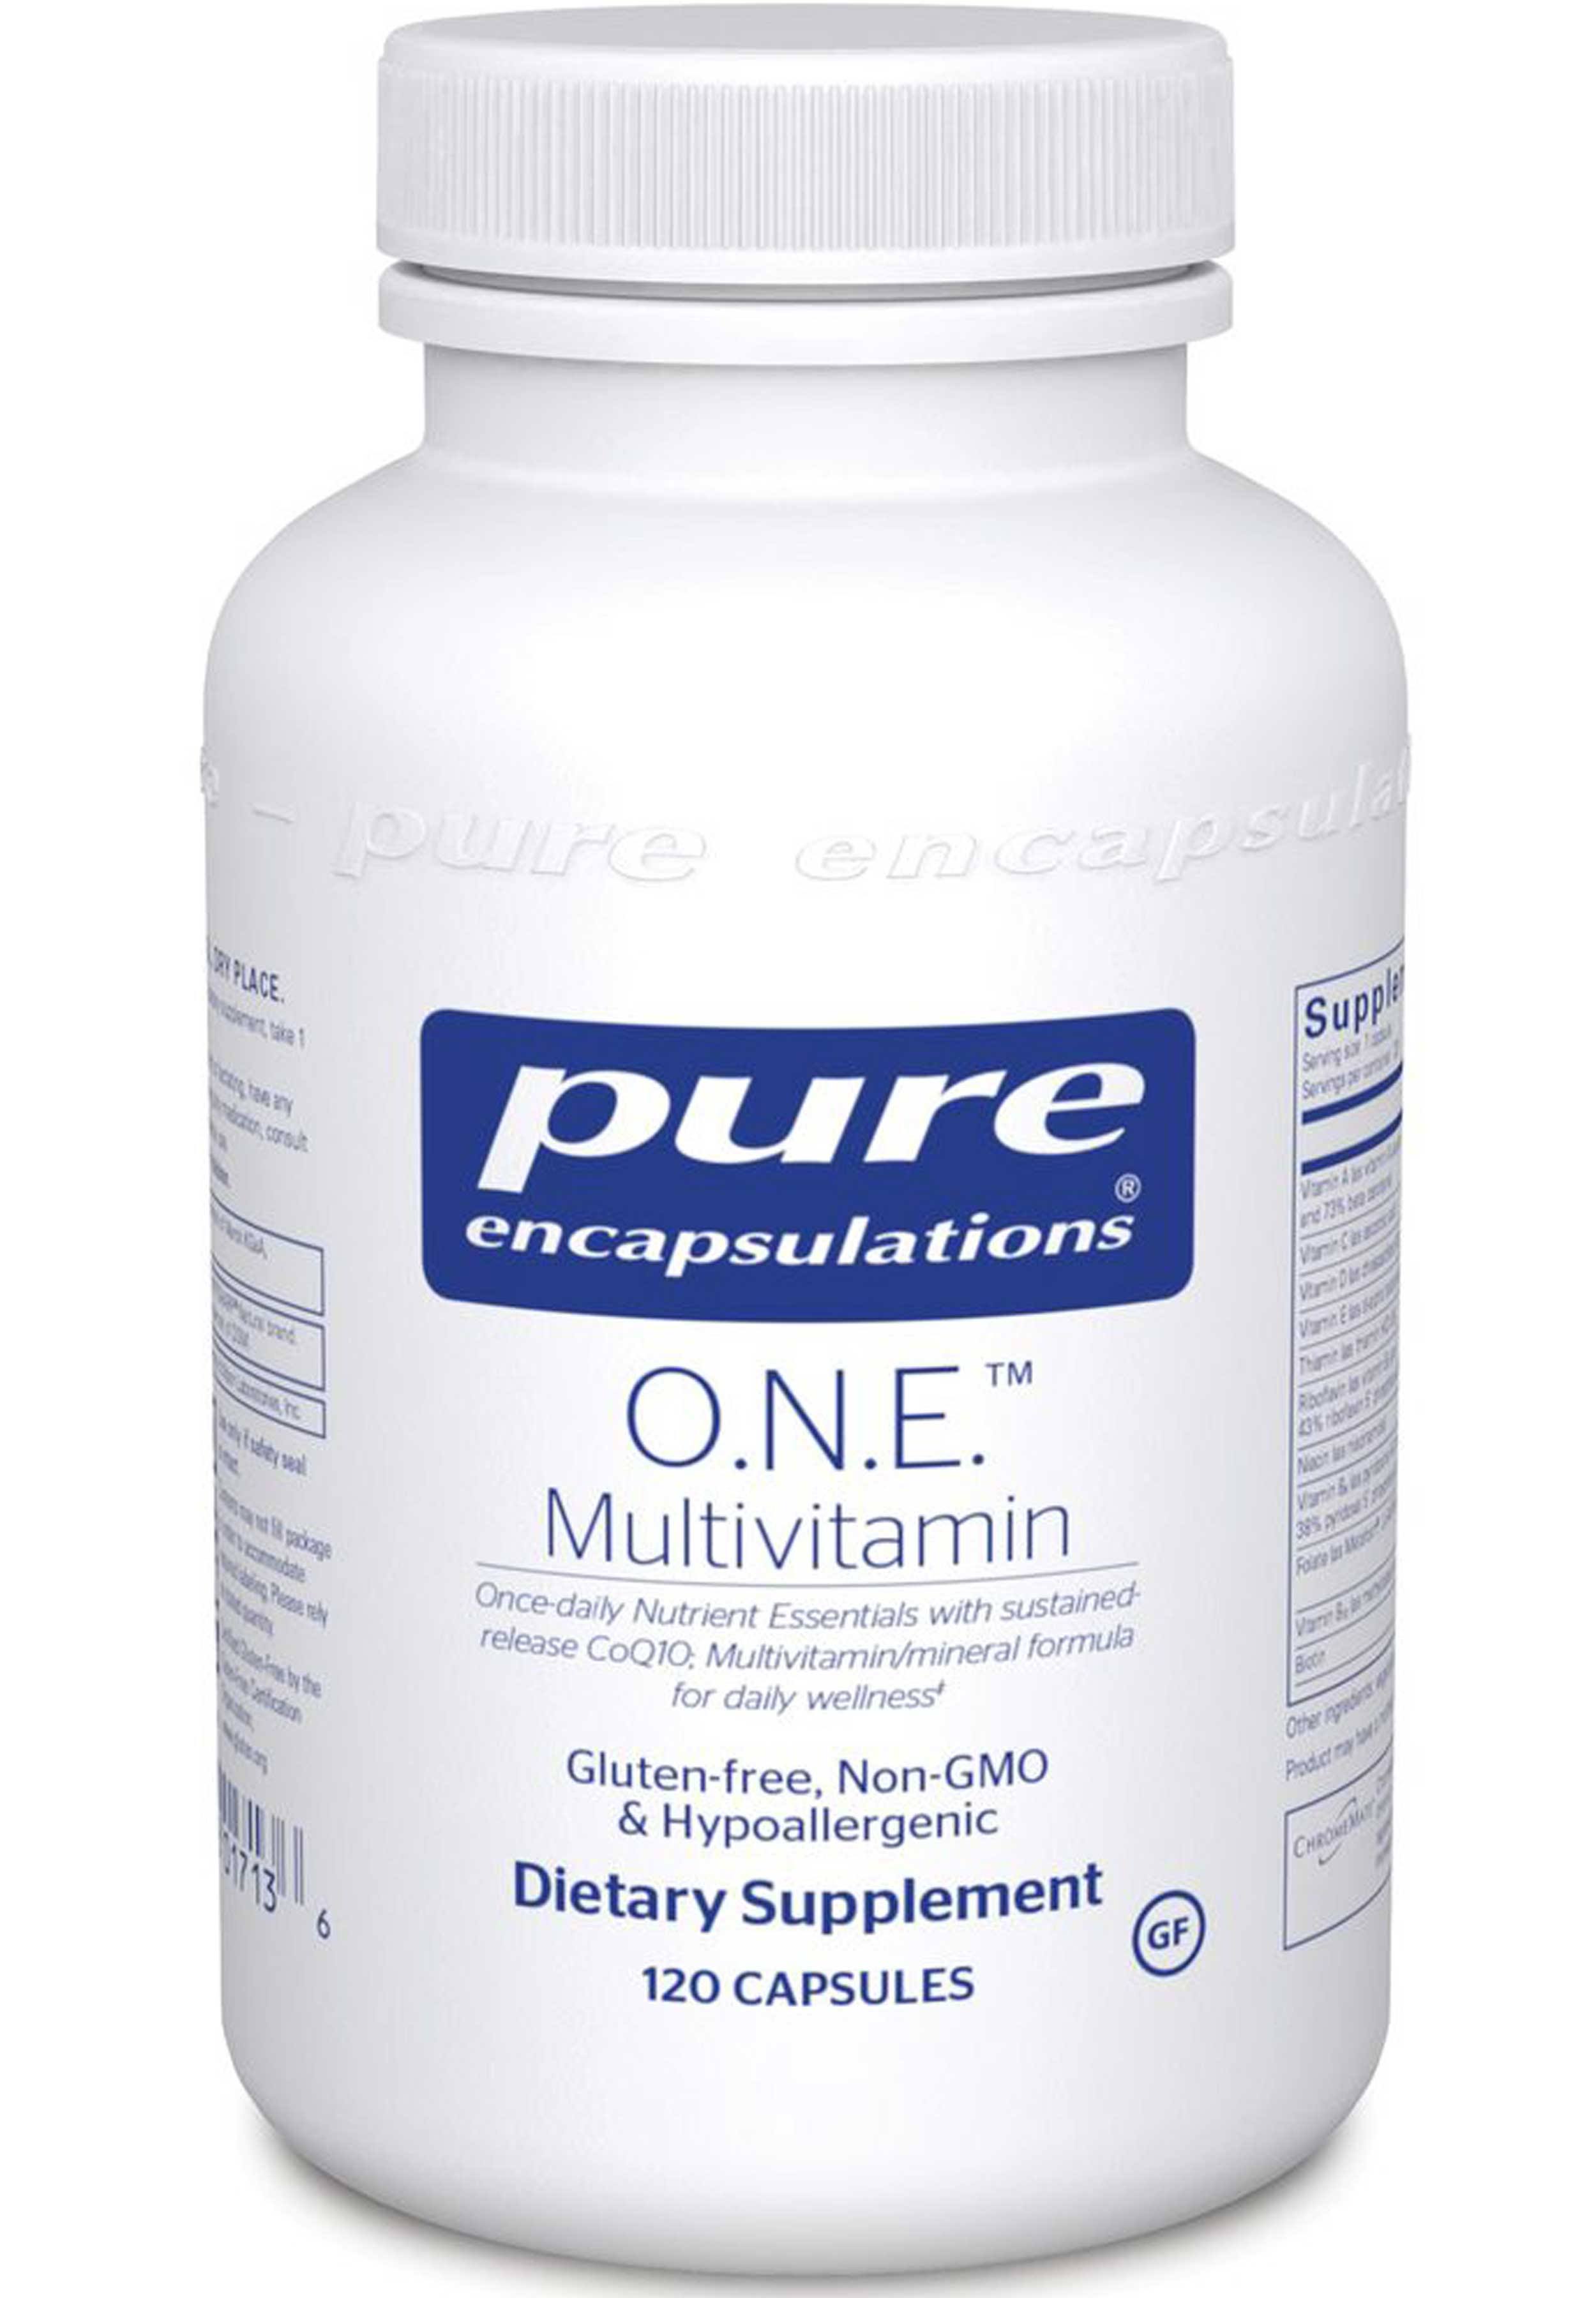 Pure Encapsulations O.N.E. Multivitamin Supplement - 120 Capsules